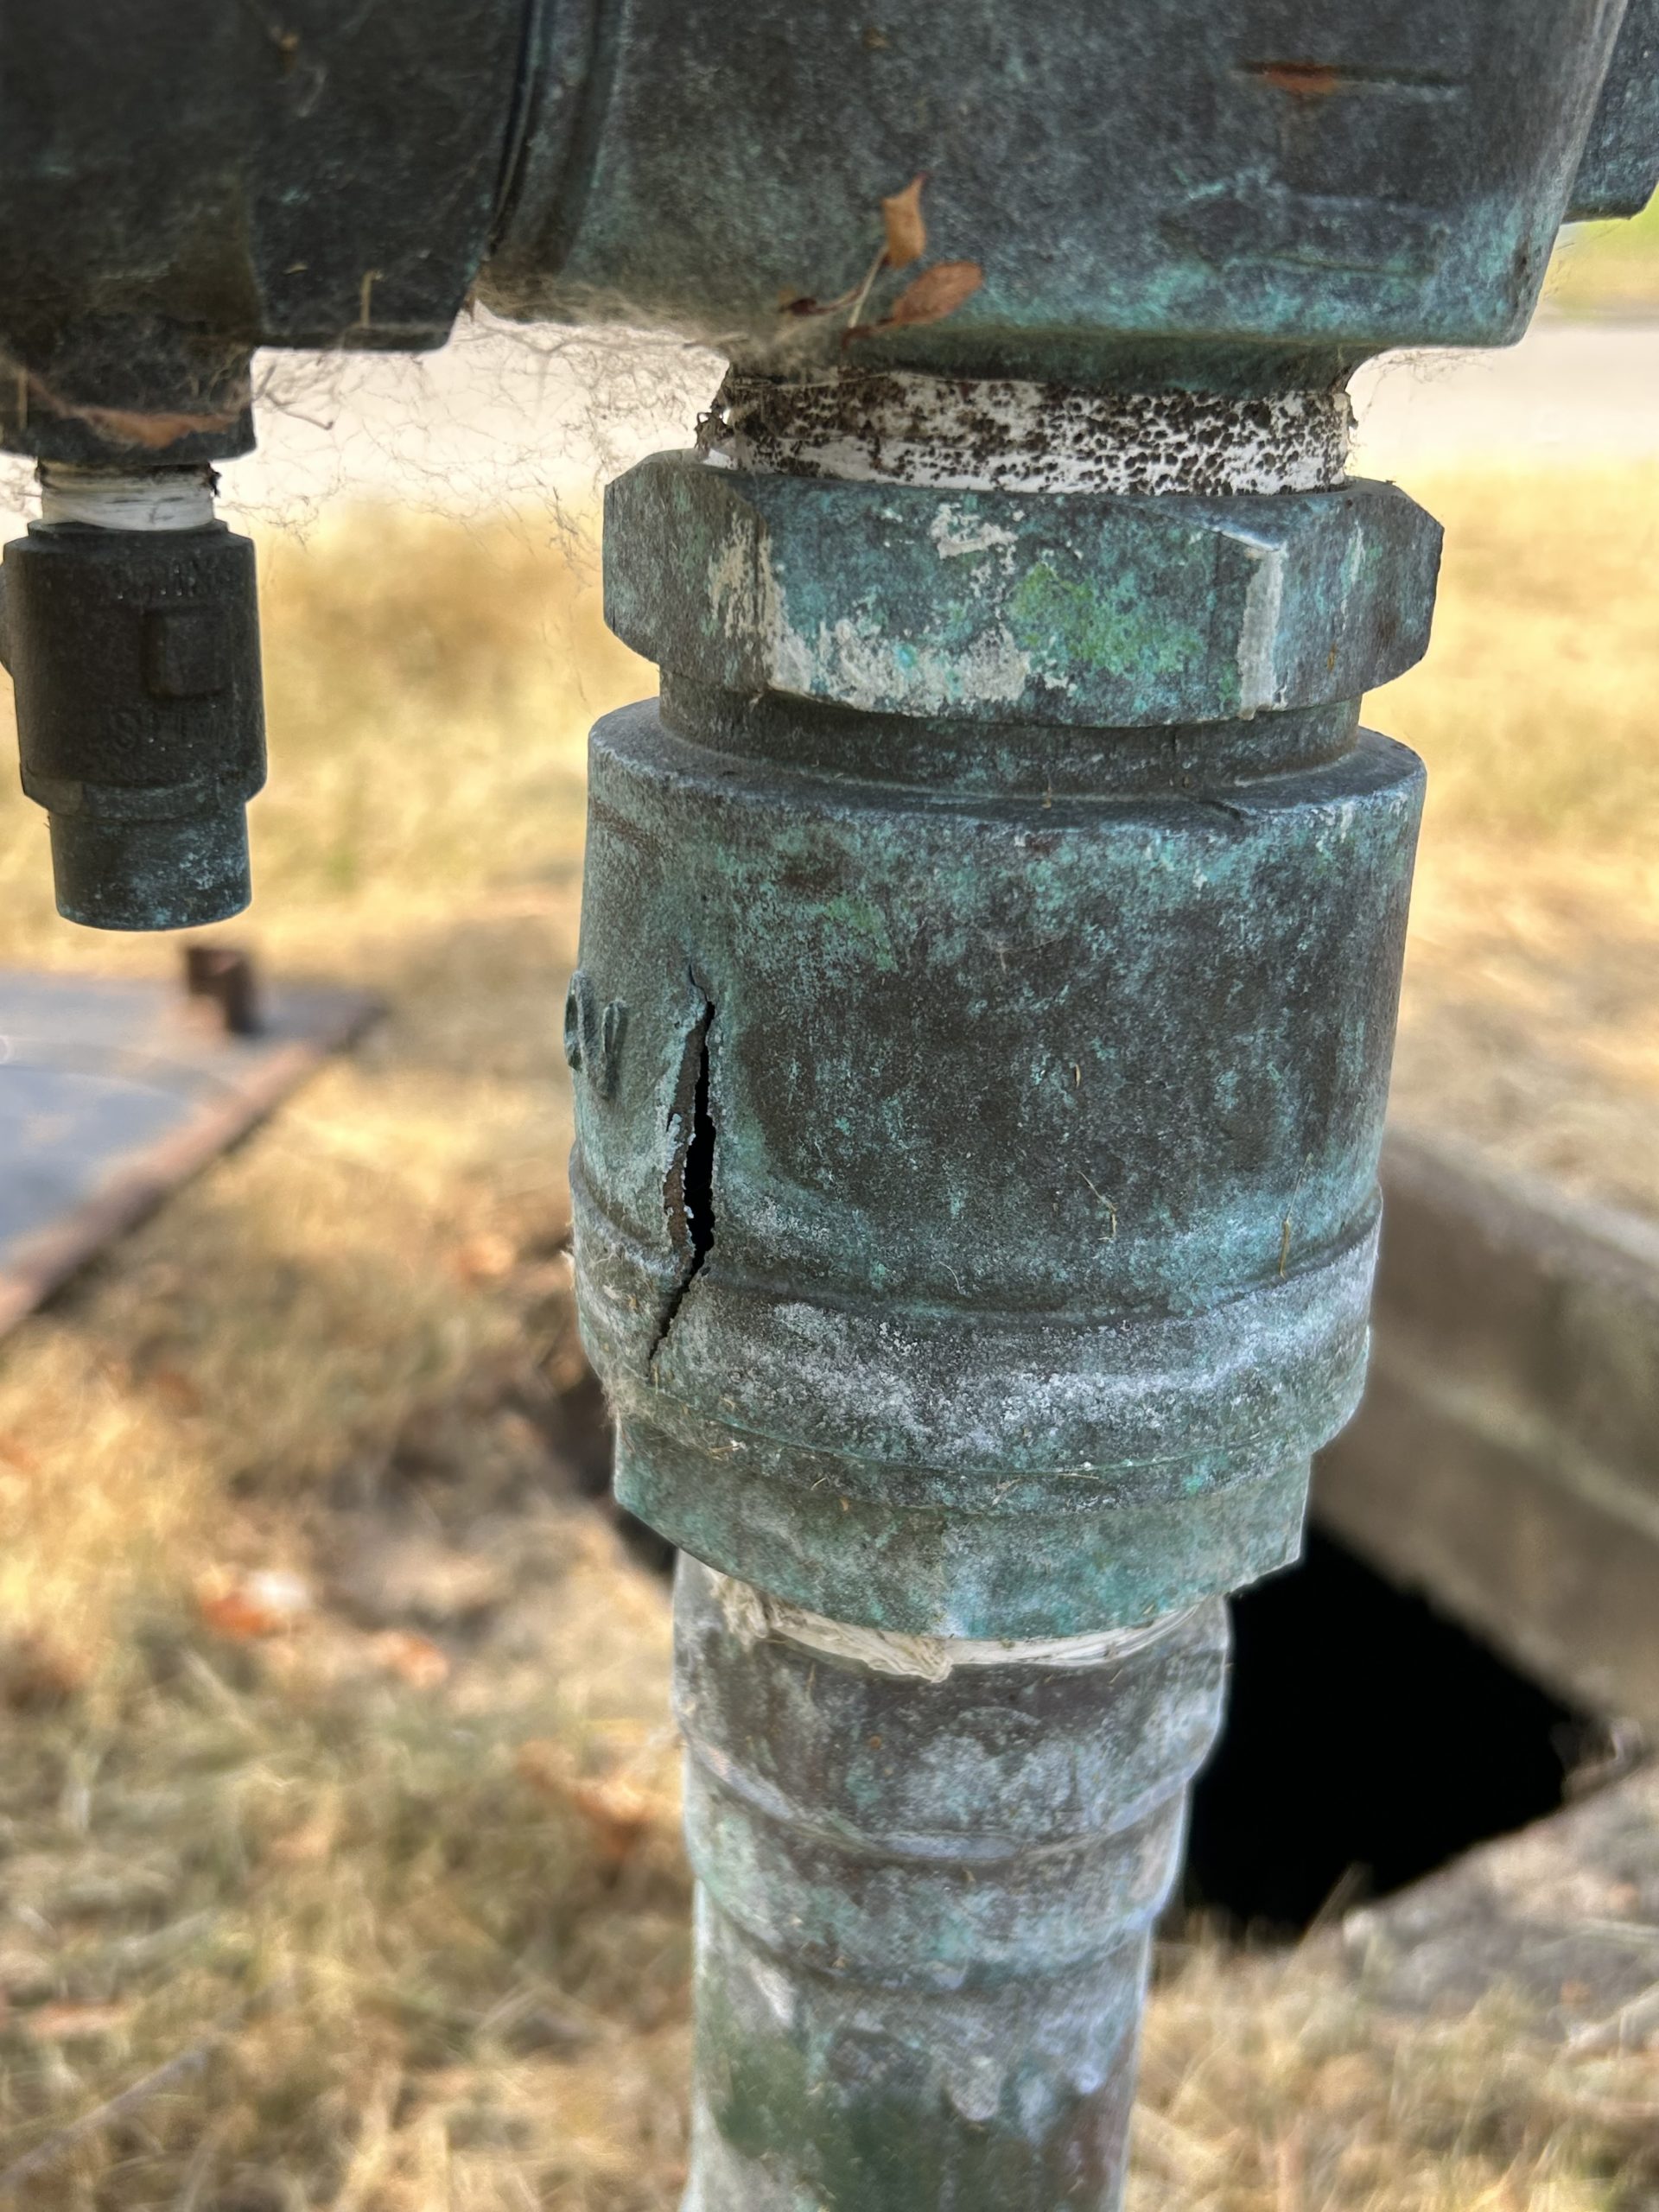 Sprinkler System Repair & Maintenance in Grand Rapids and West Michigan